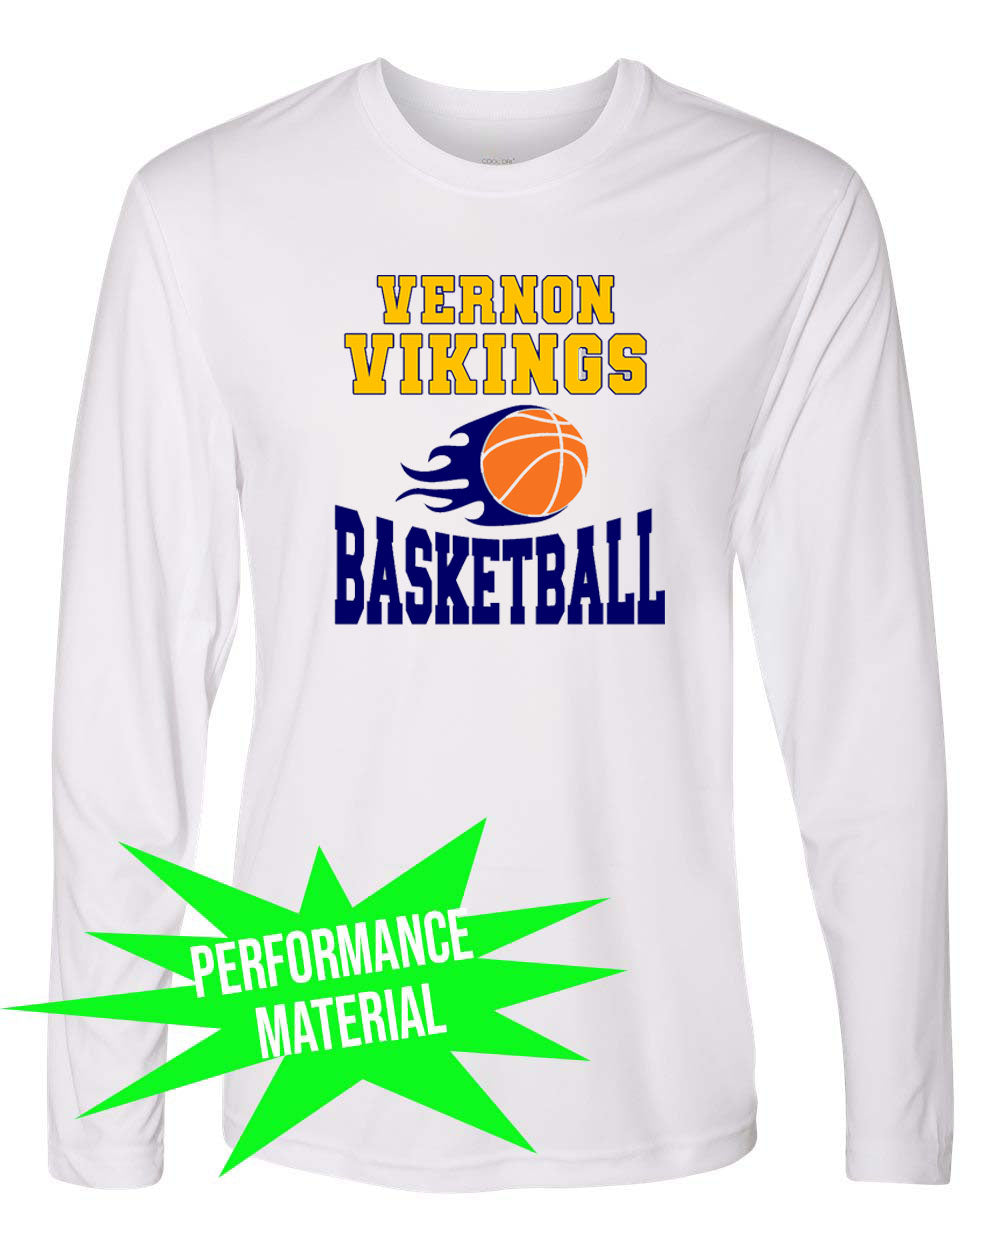 Vikings Basketball Performance Material Design 4 Long Sleeve Shirt